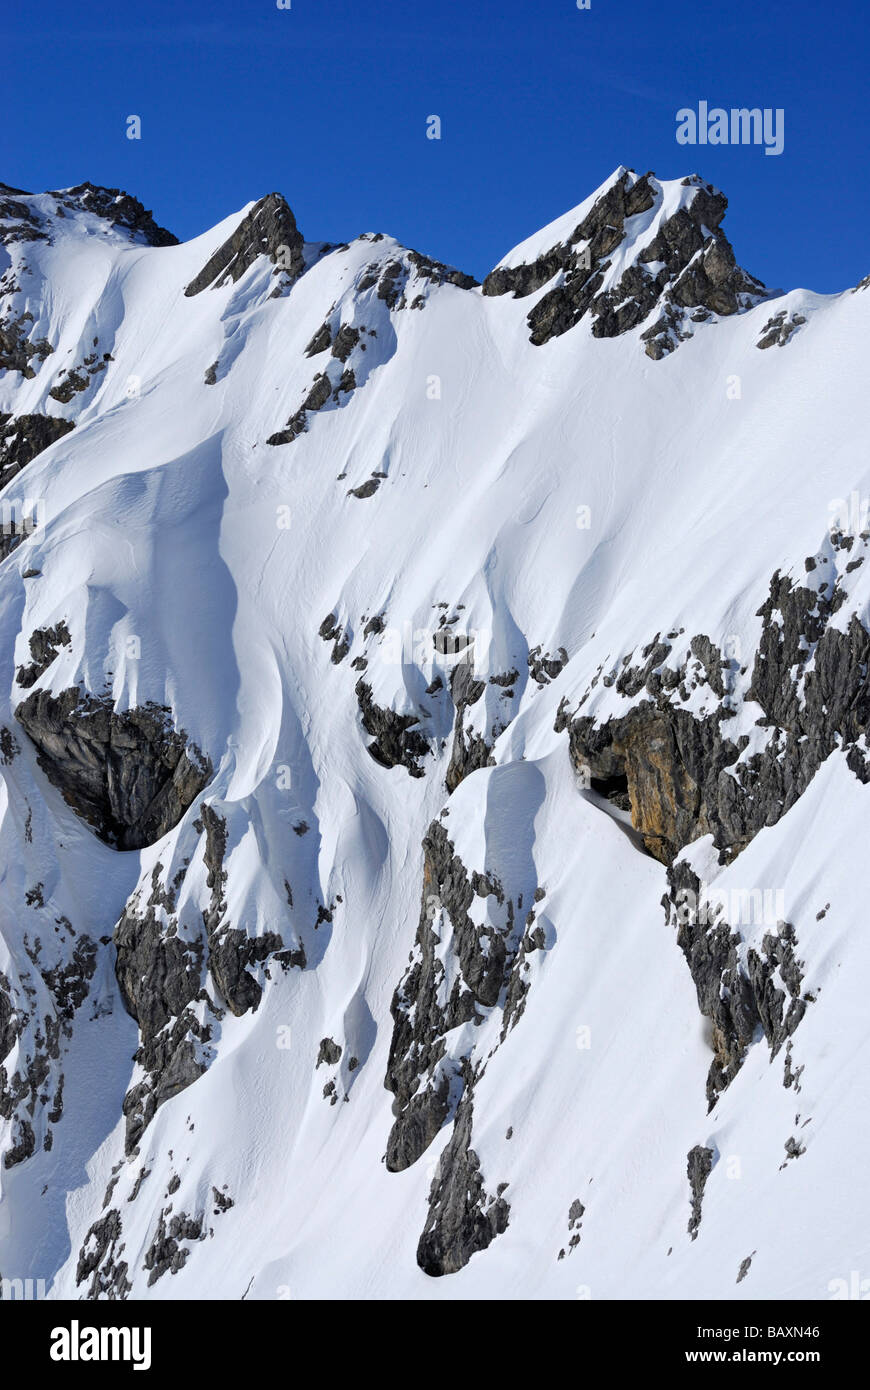 deeply snow-covered ridge, Woleggleskarspitze, Allgaeu range, Allgaeu, Tyrol, Austria Stock Photo